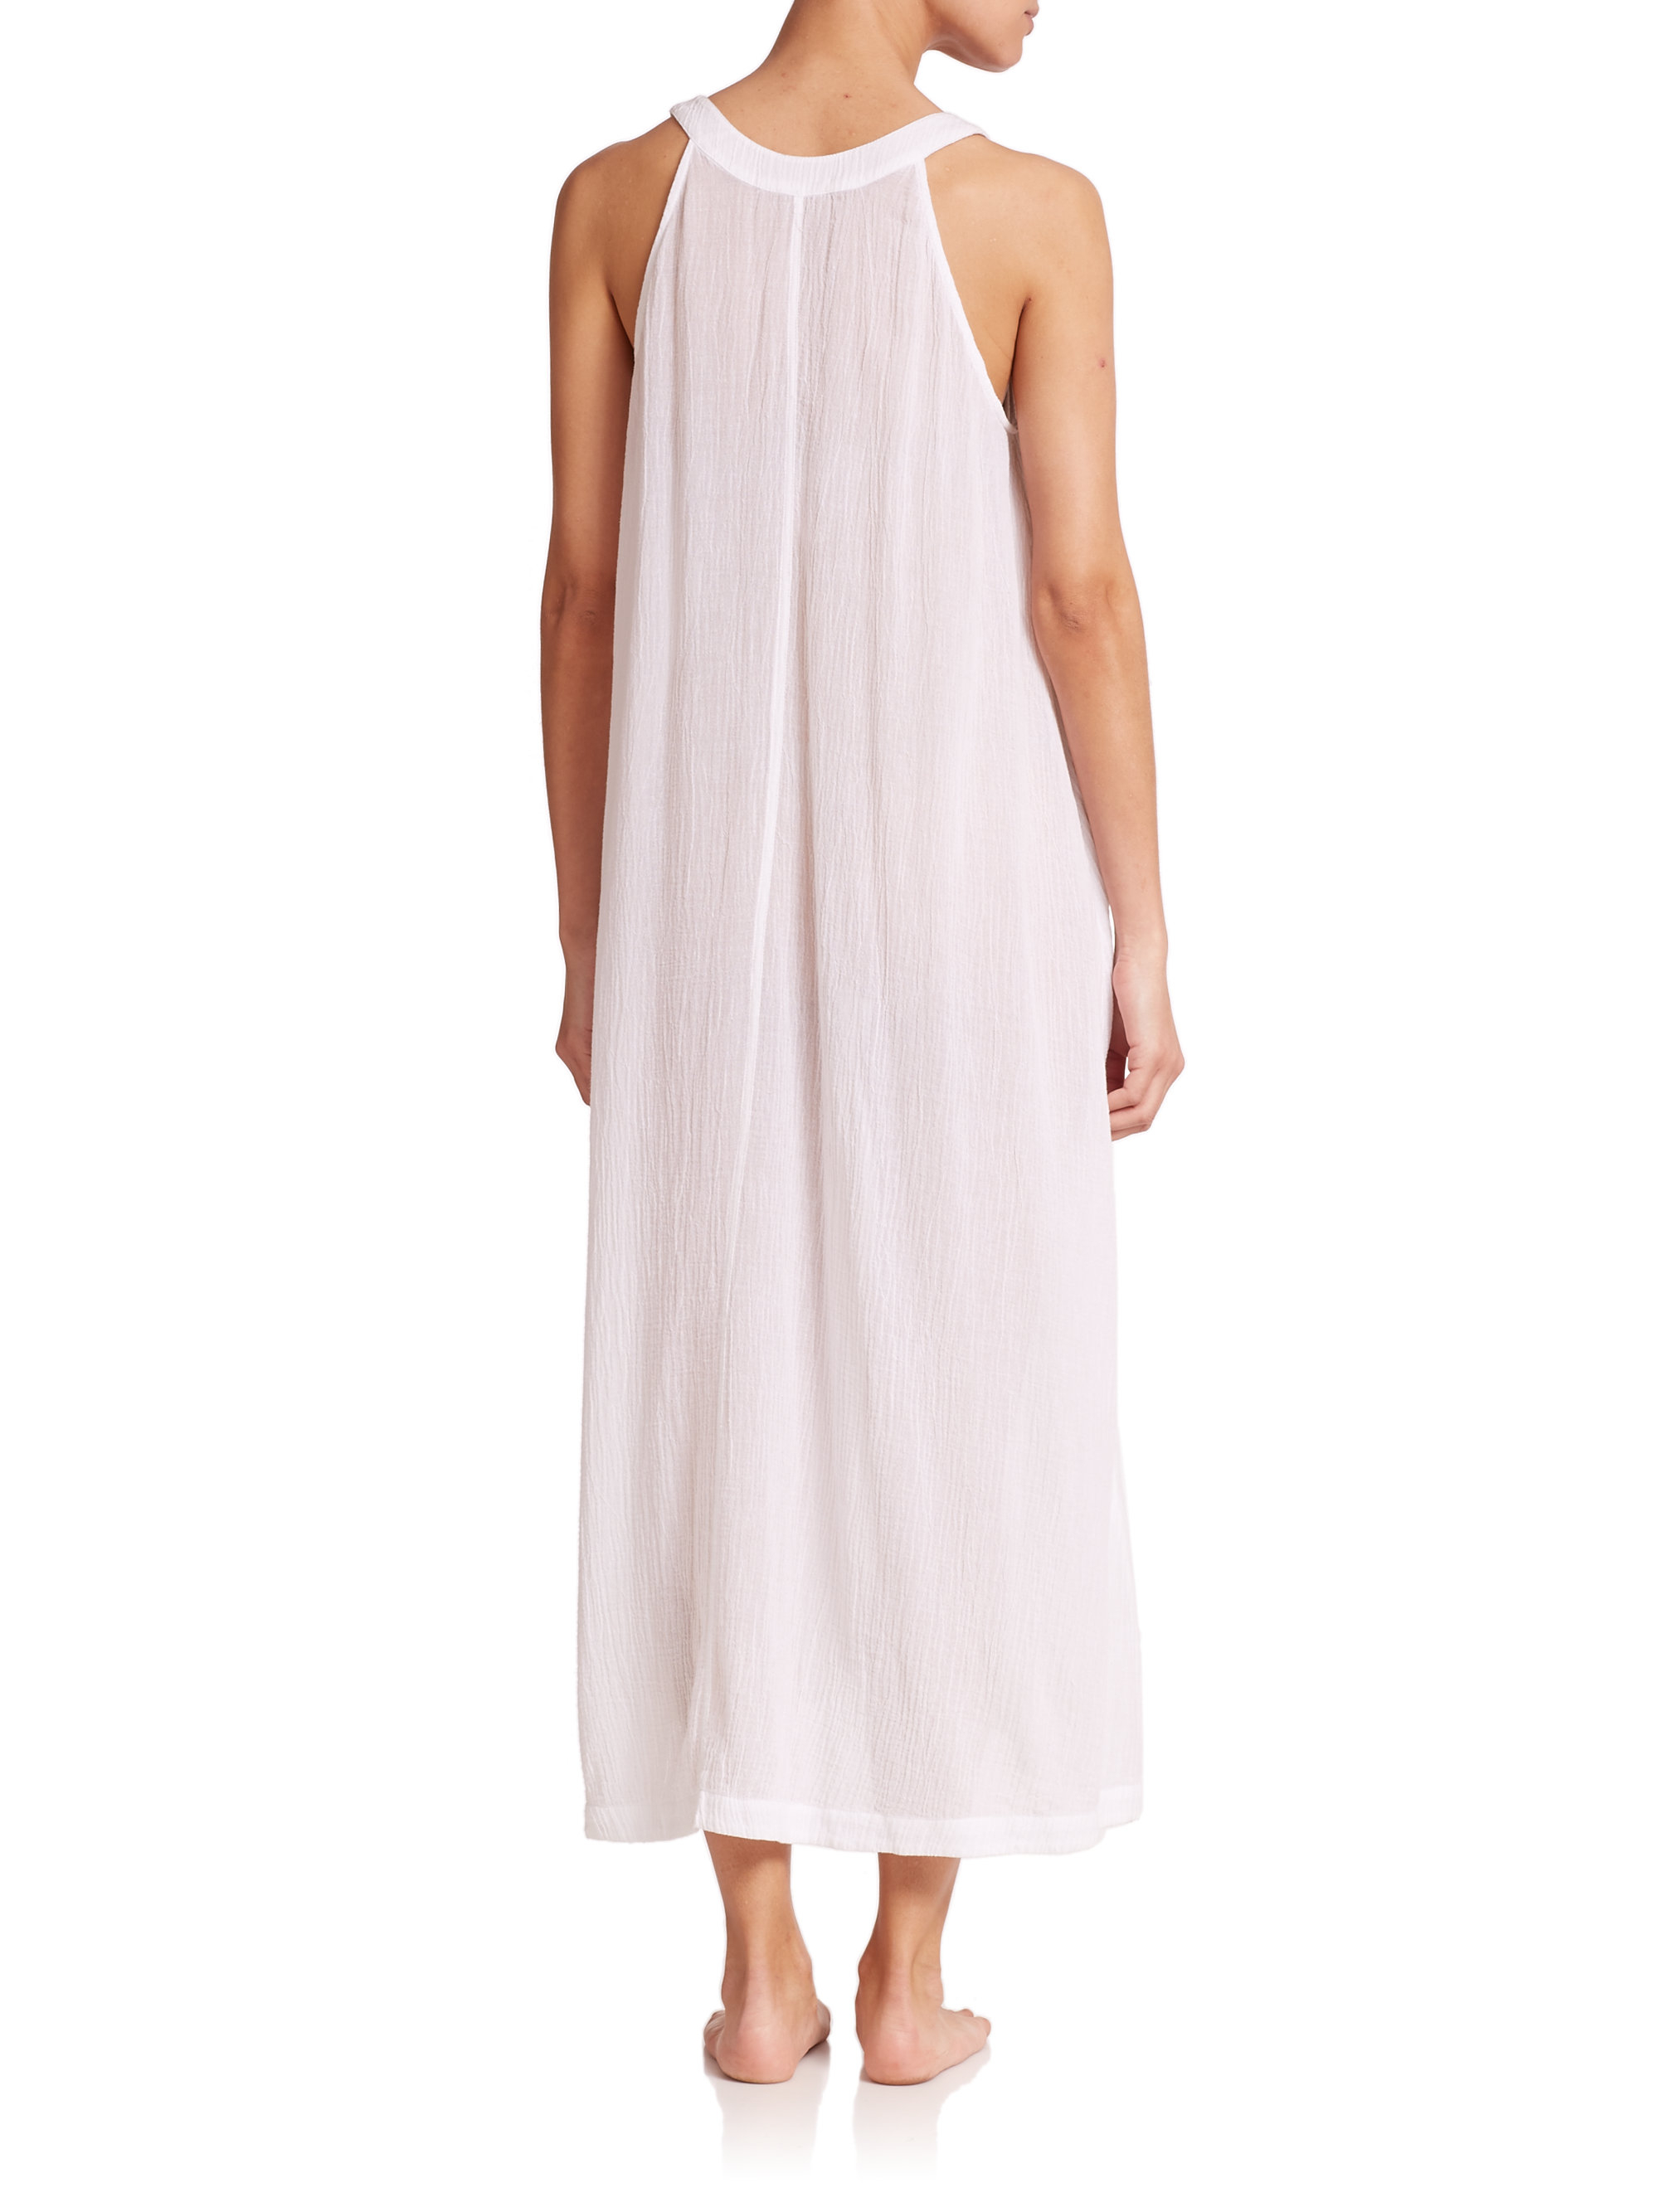 Lyst - Skin Crinkle Gauze Long Gown in White